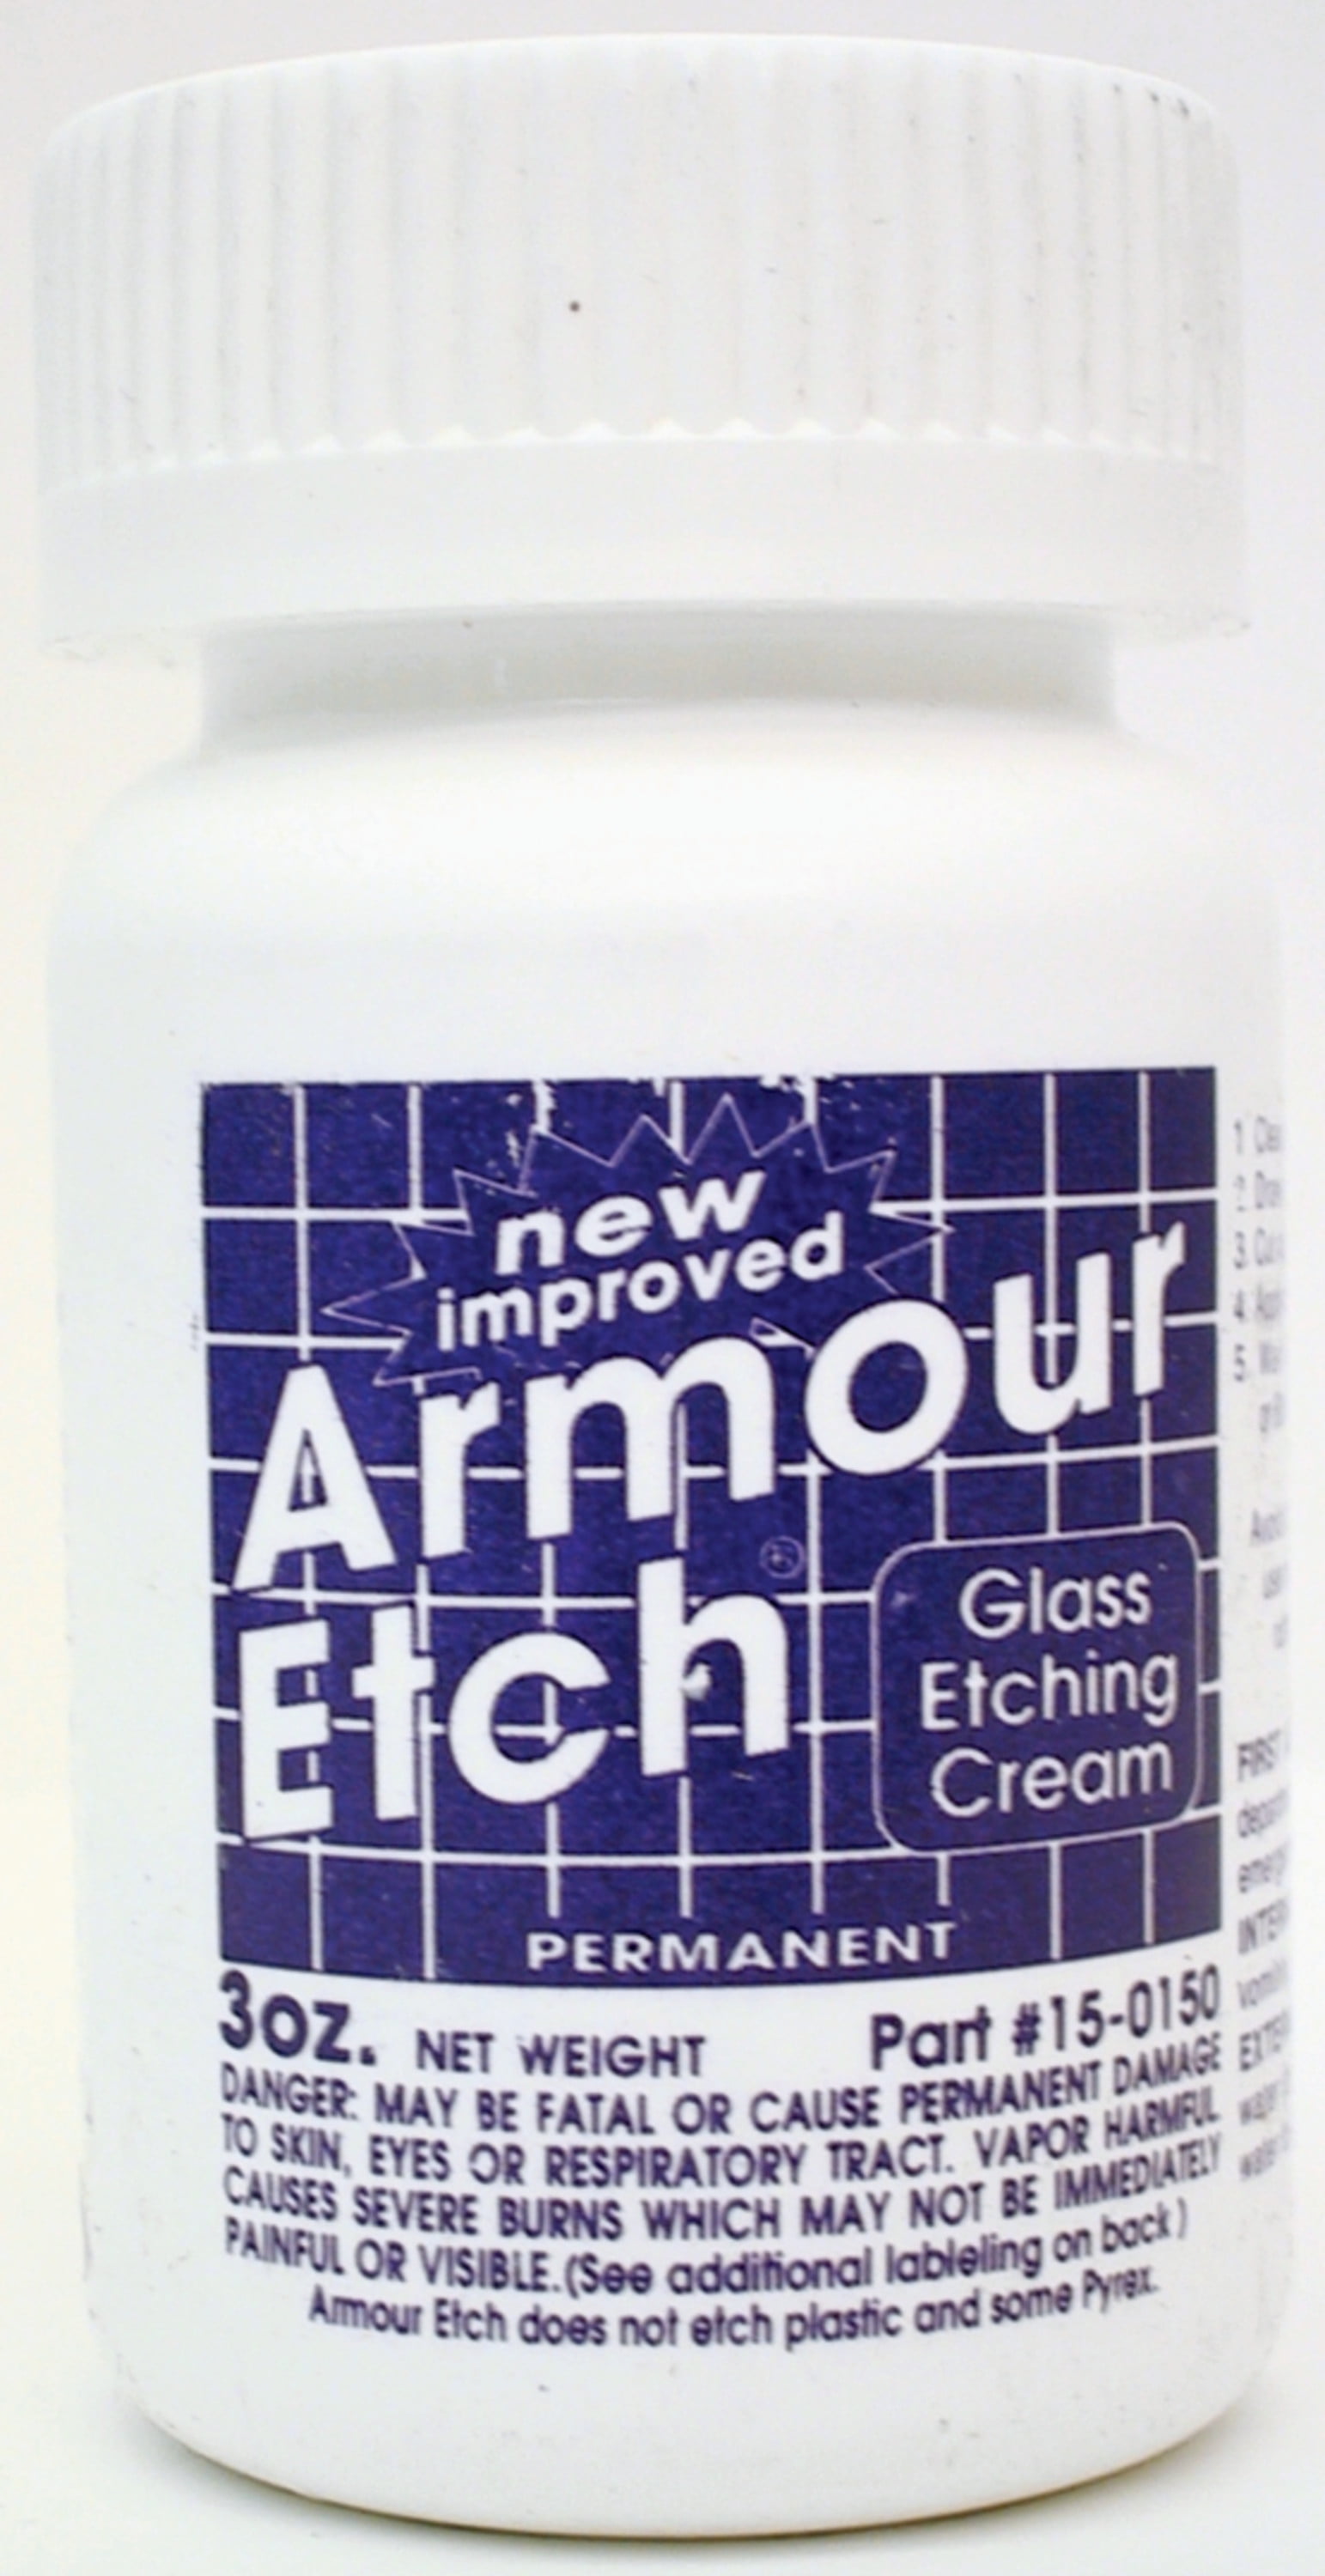 Armour Etch Glass Etching Cream, 3 oz.